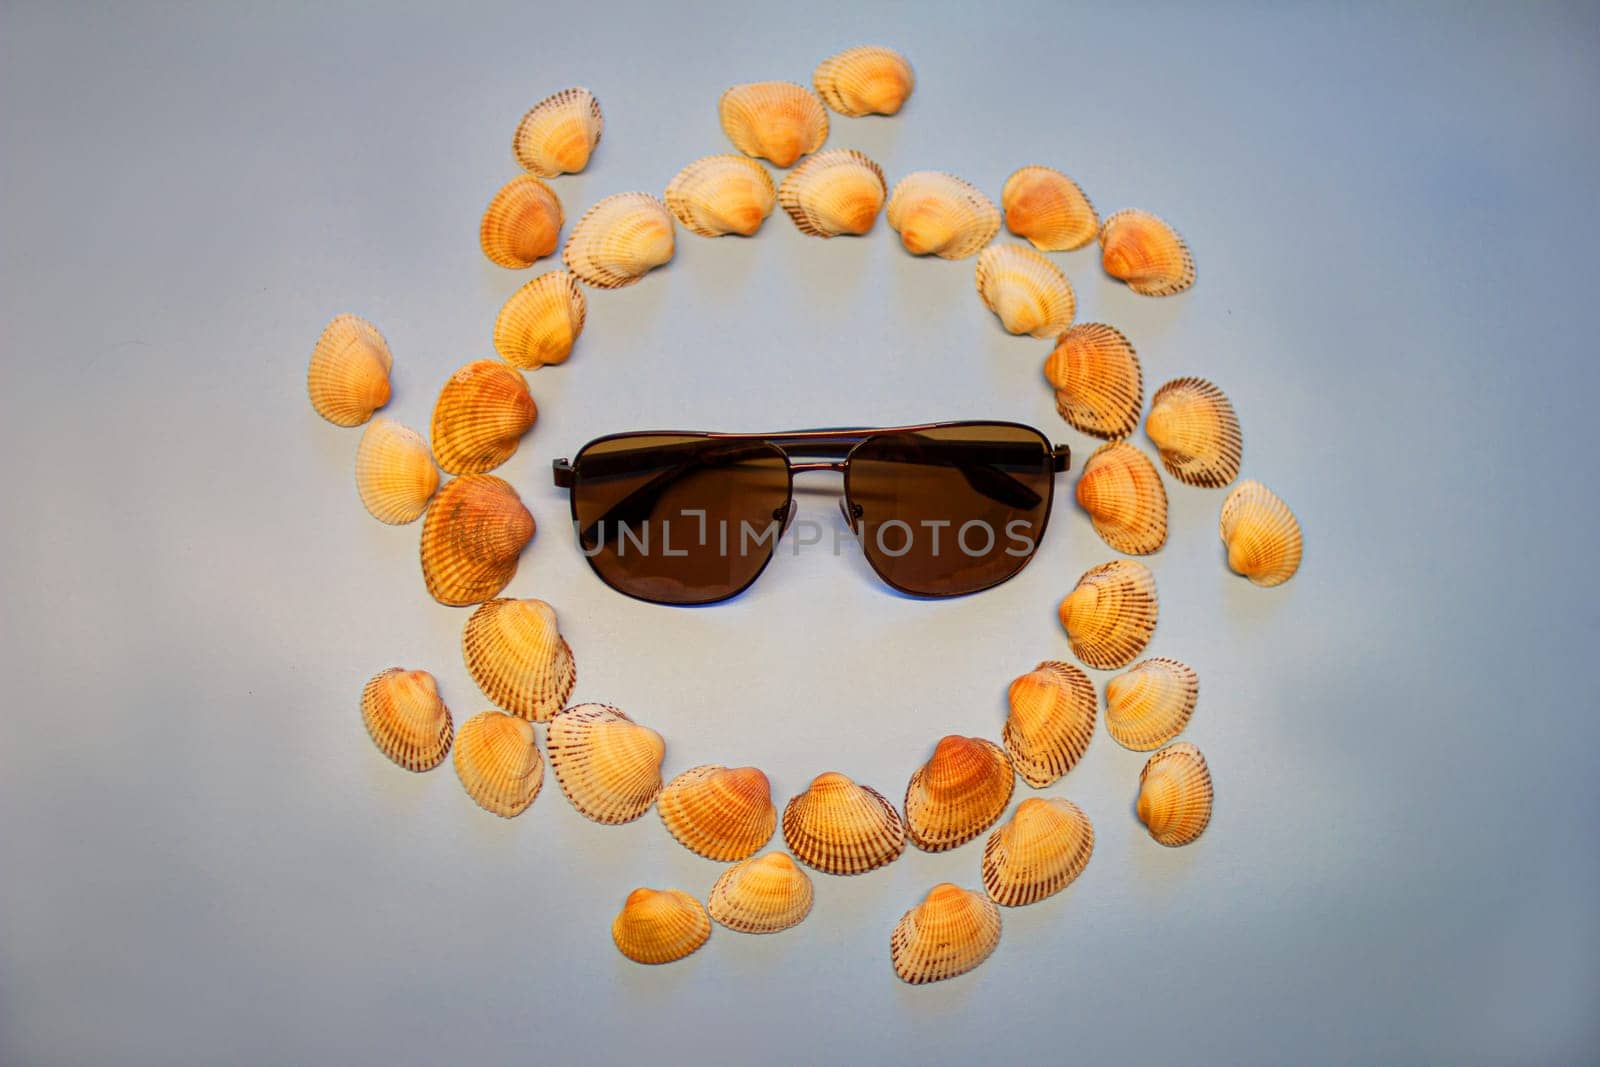 Sun of shells in sunglasses by VeronikaAngo